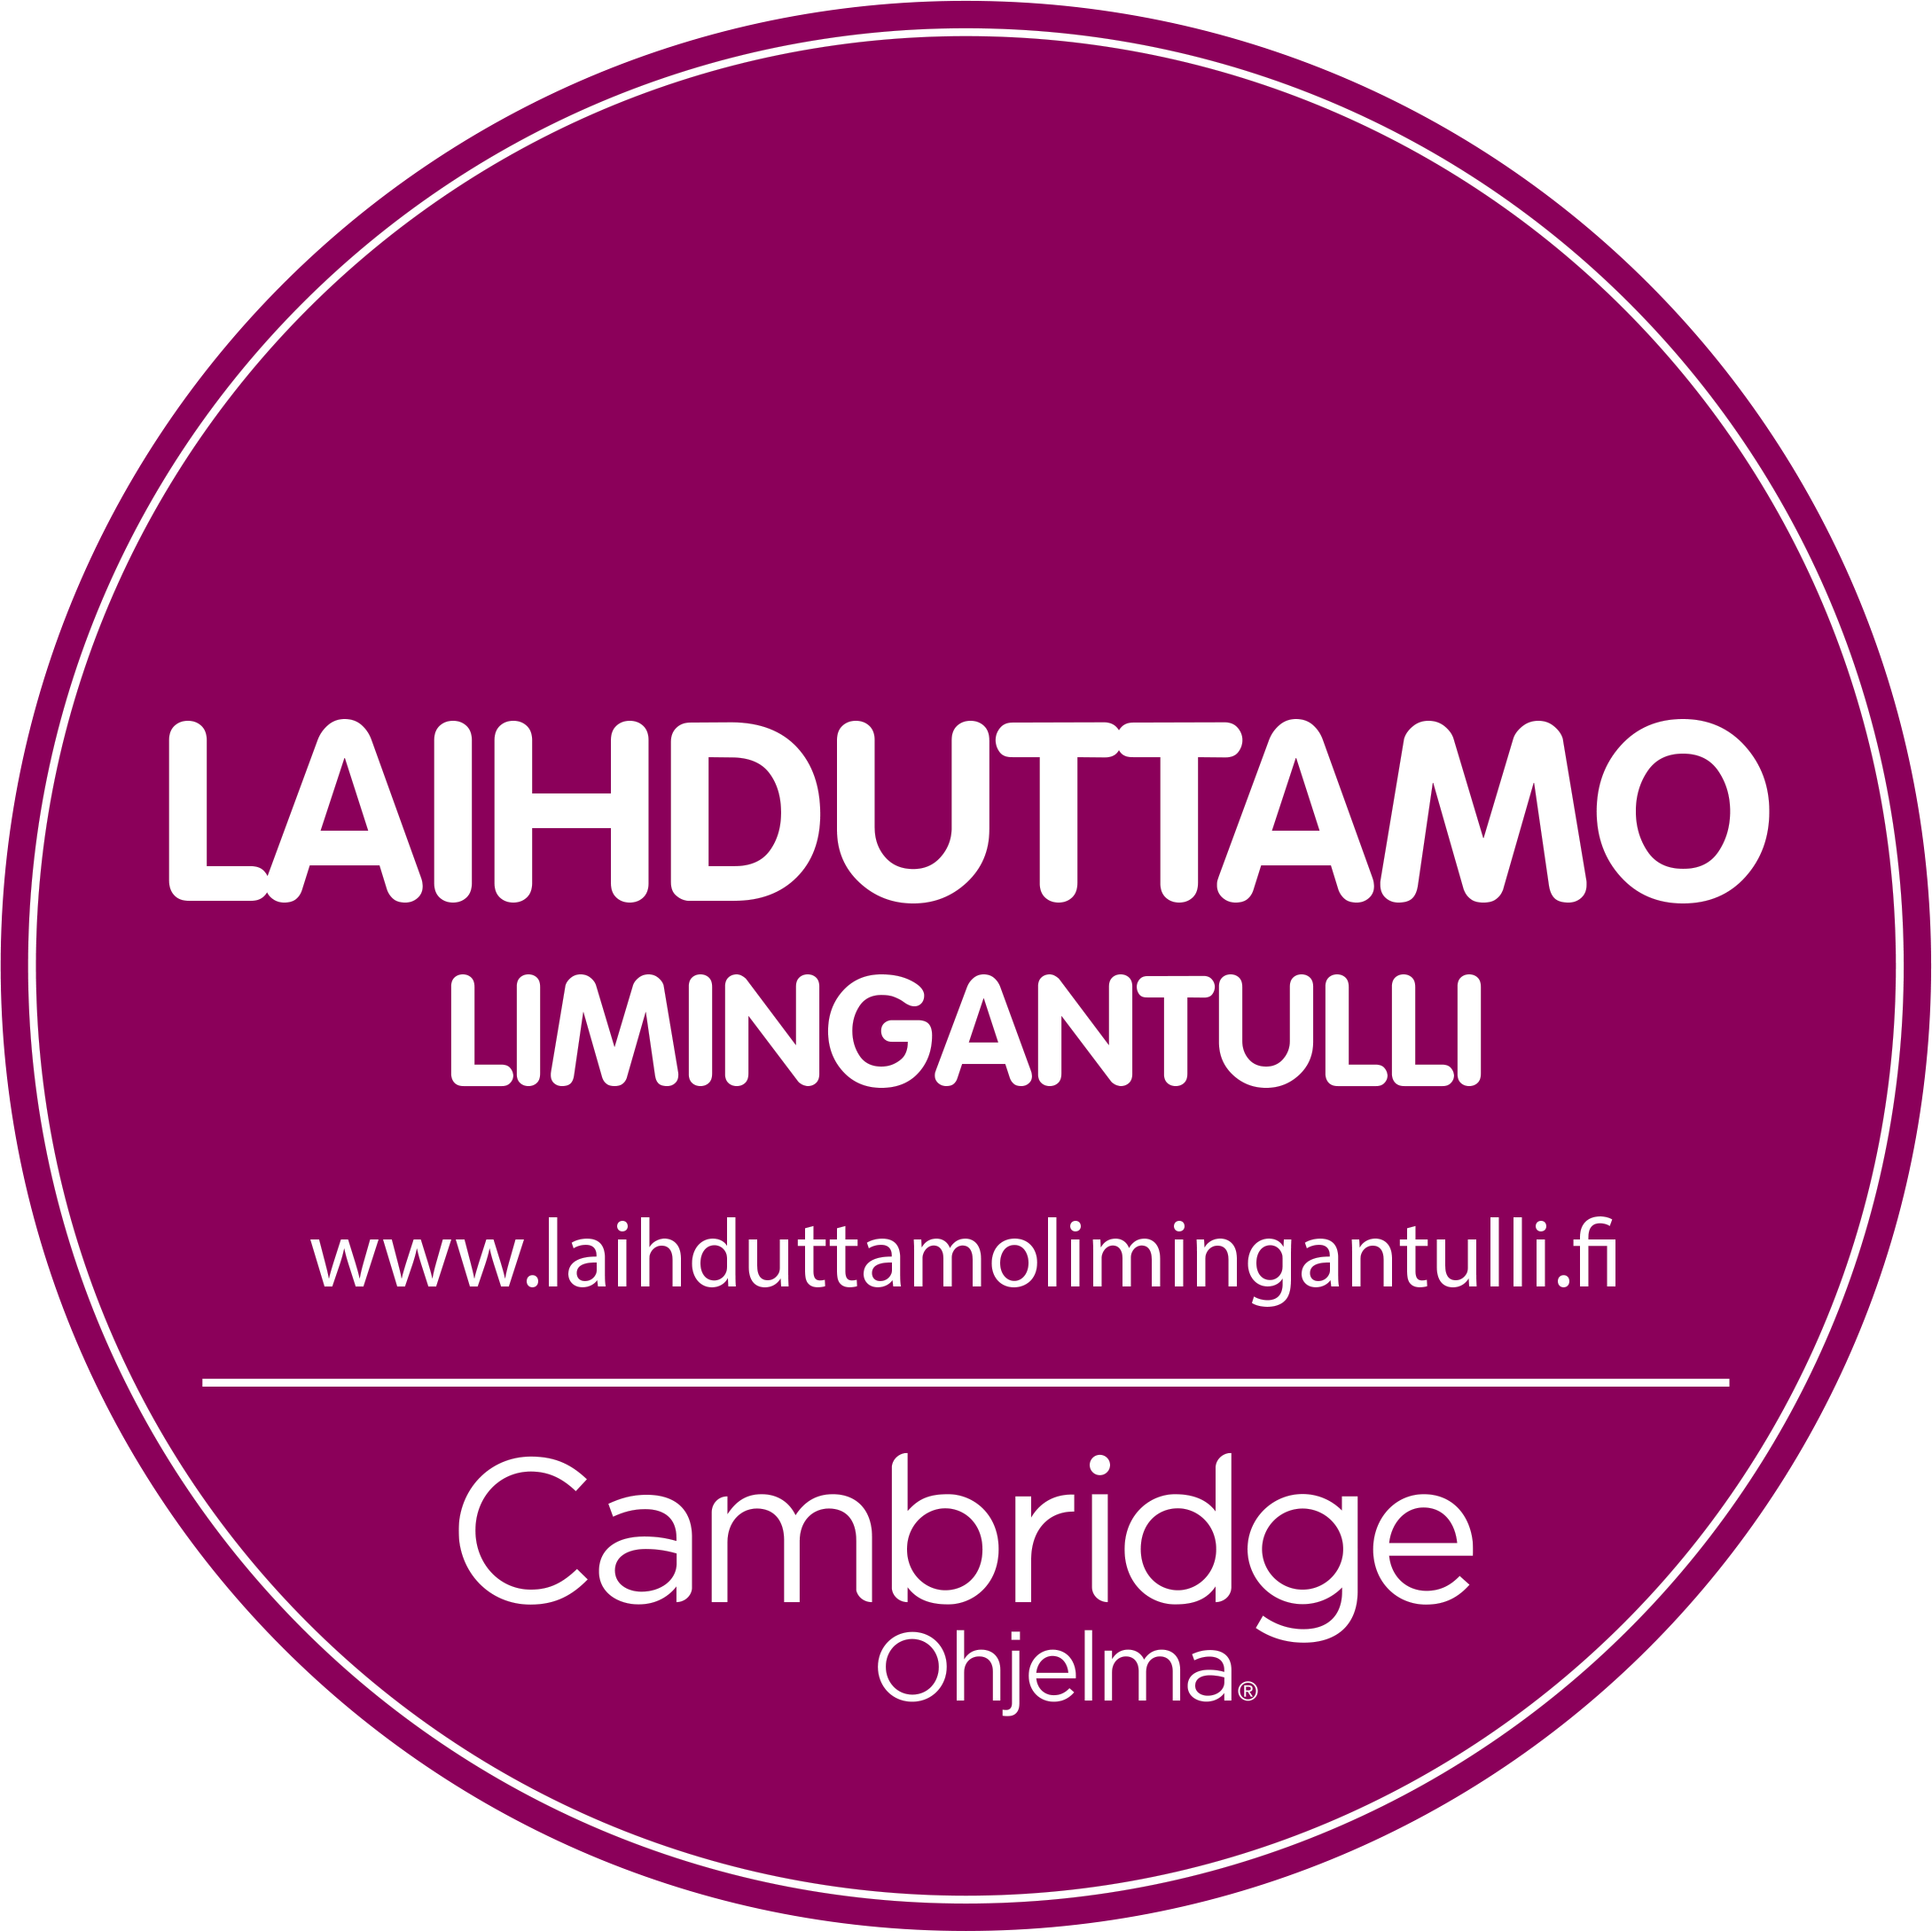 Cambridge Ohjelma Laihduttamo Oulu, Limingantulli